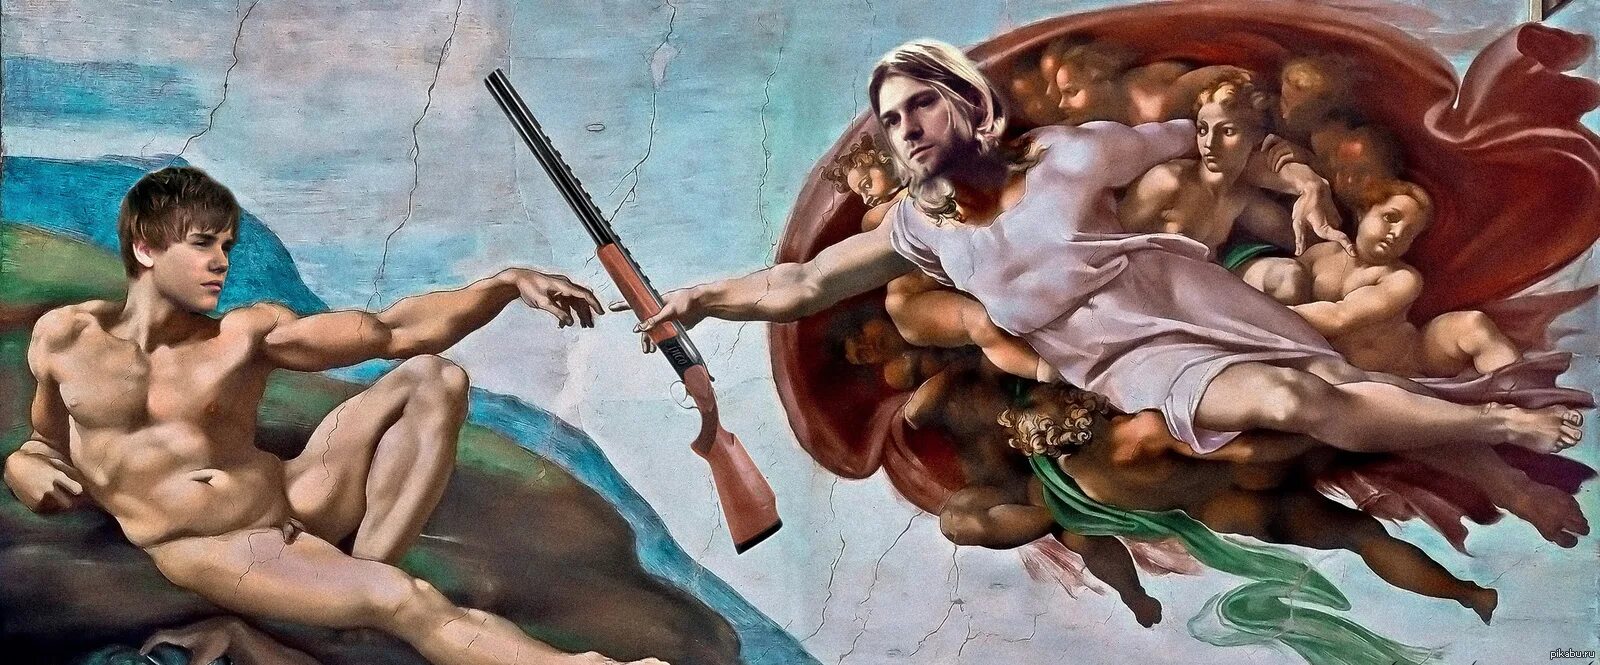 Микеланджело Сотворение Адама. "Сотворение Адама" Микеланджело, 1511. Микеланджело Сотворение Адама мемы.